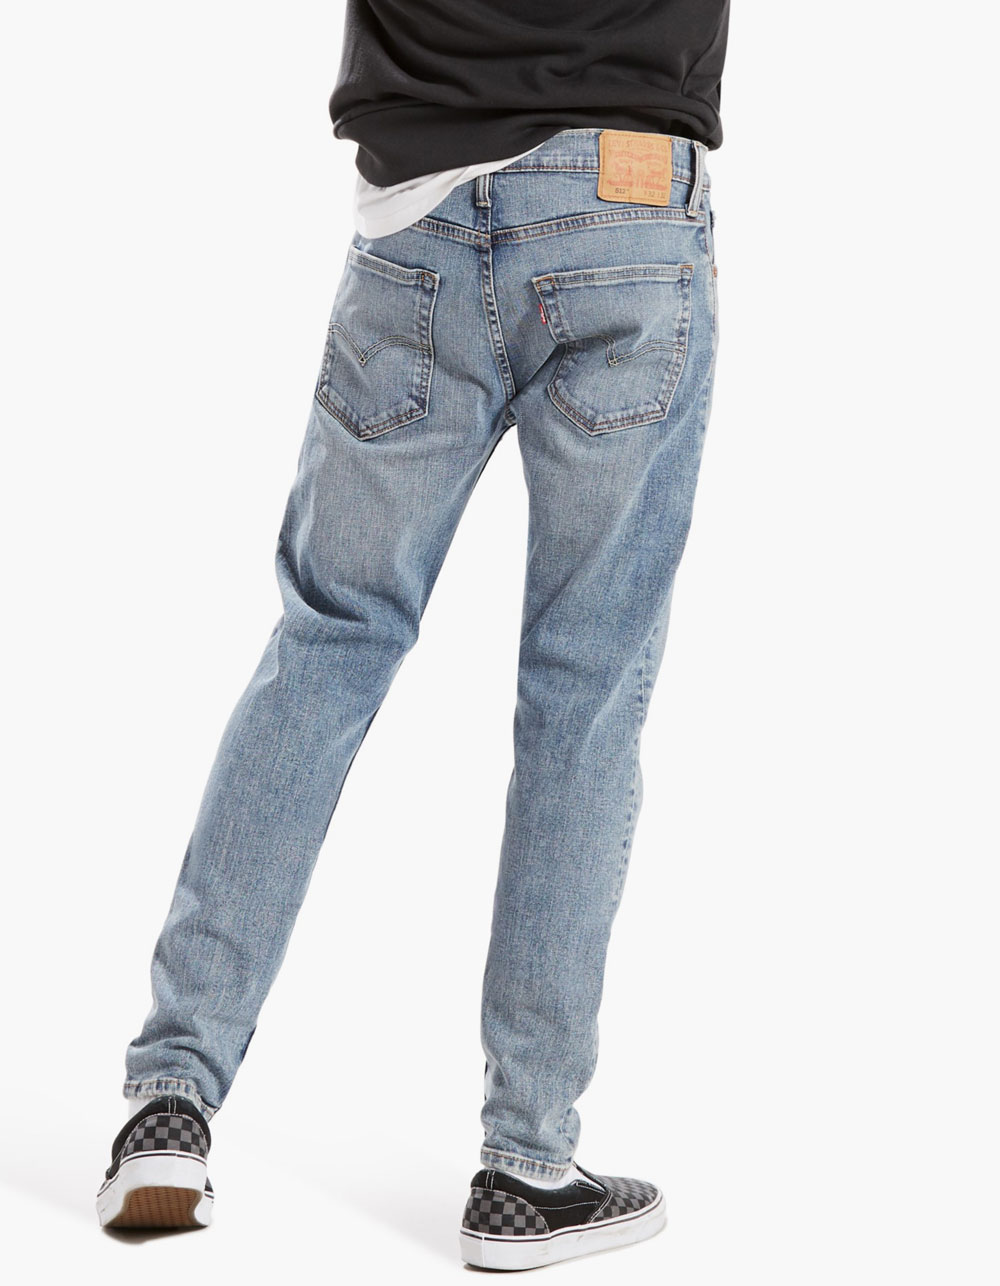 Levi's SIN CITY-WATERLESS Men's 512 Slim Taper Fit Stretch Jeans, US 29x32